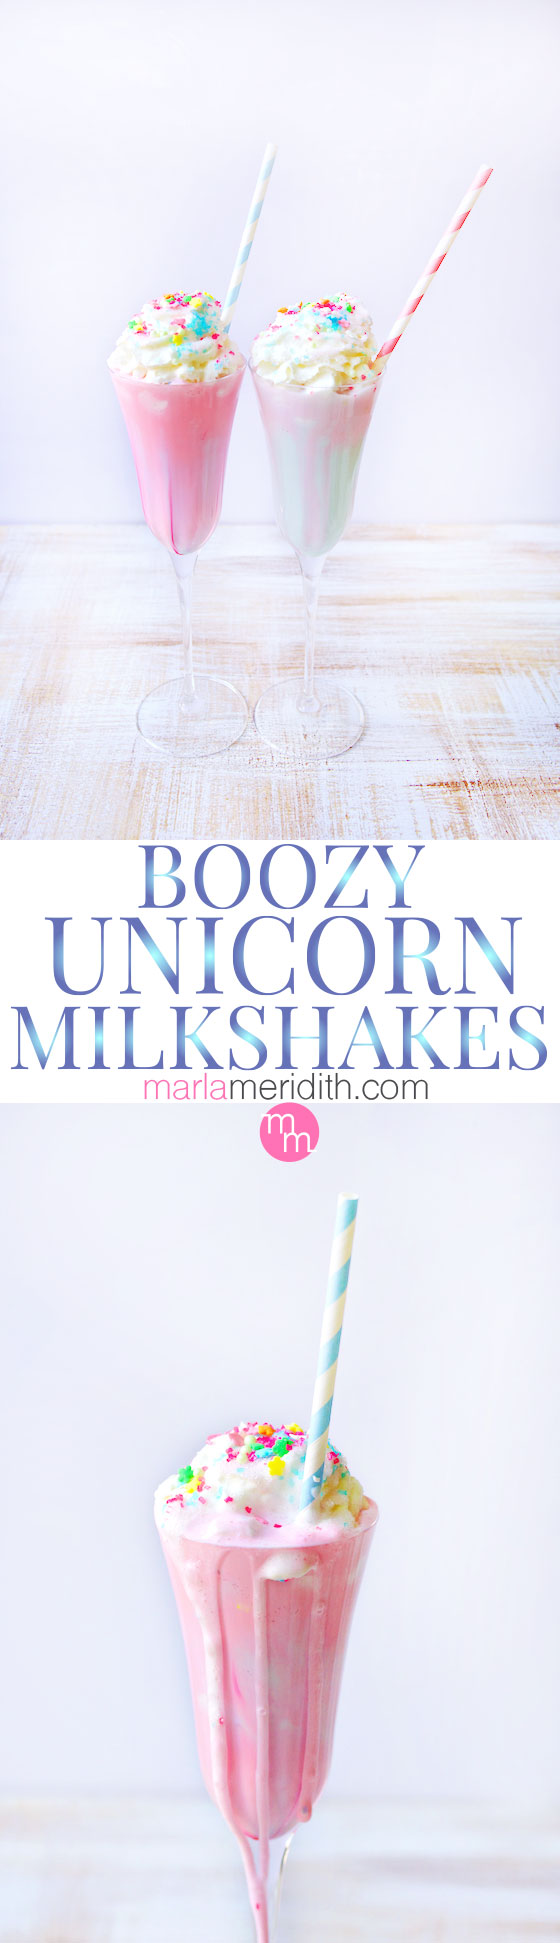 Boozy Unicorn Milkshakes recipe. The ultimate adult treat! MarlaMeridith.com ( @marlameridith )